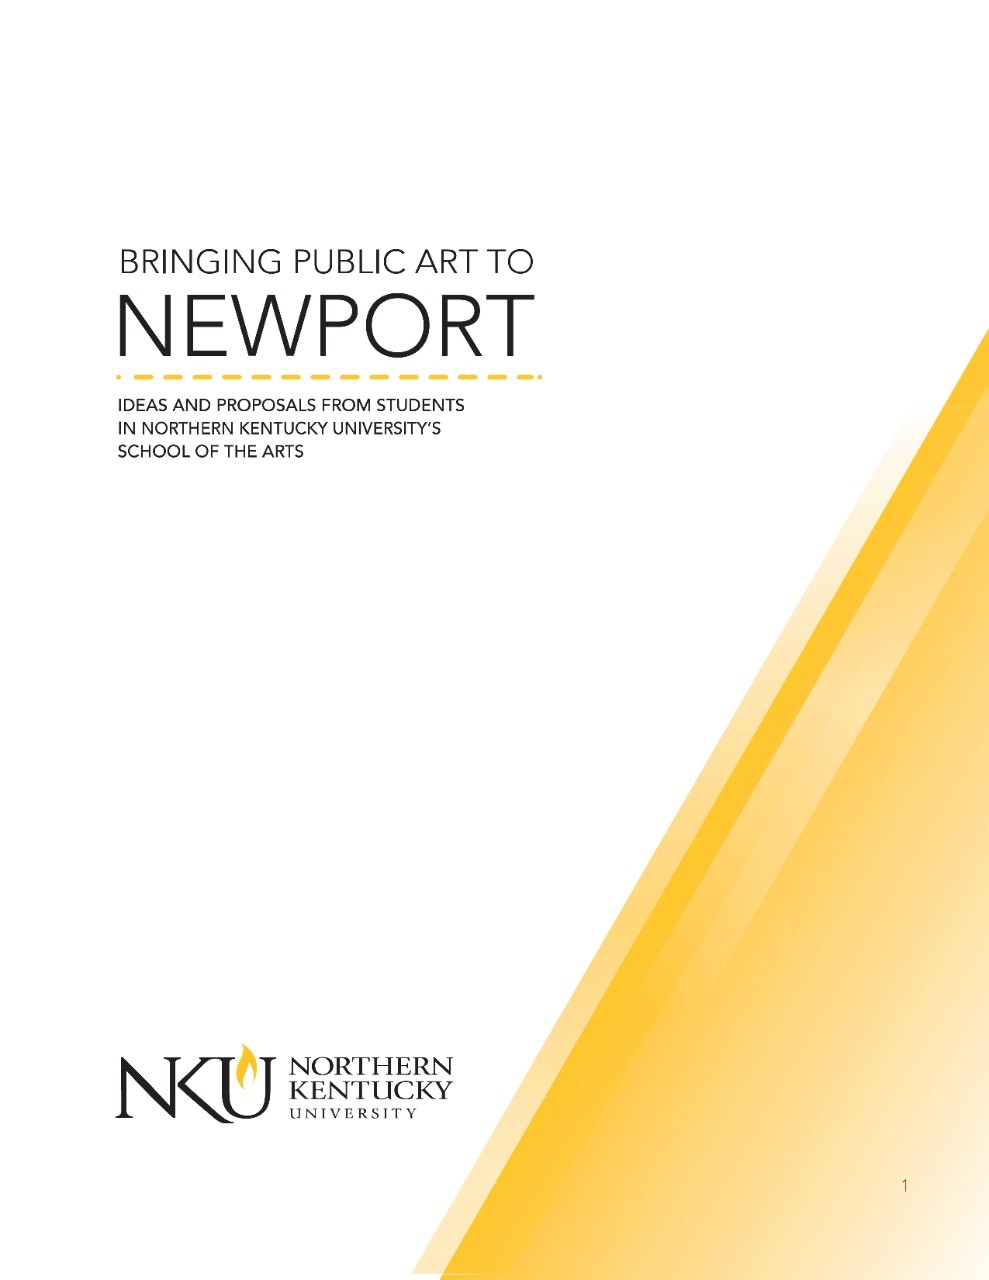 Bringing Public Art to Newport by Northern Kentucky University